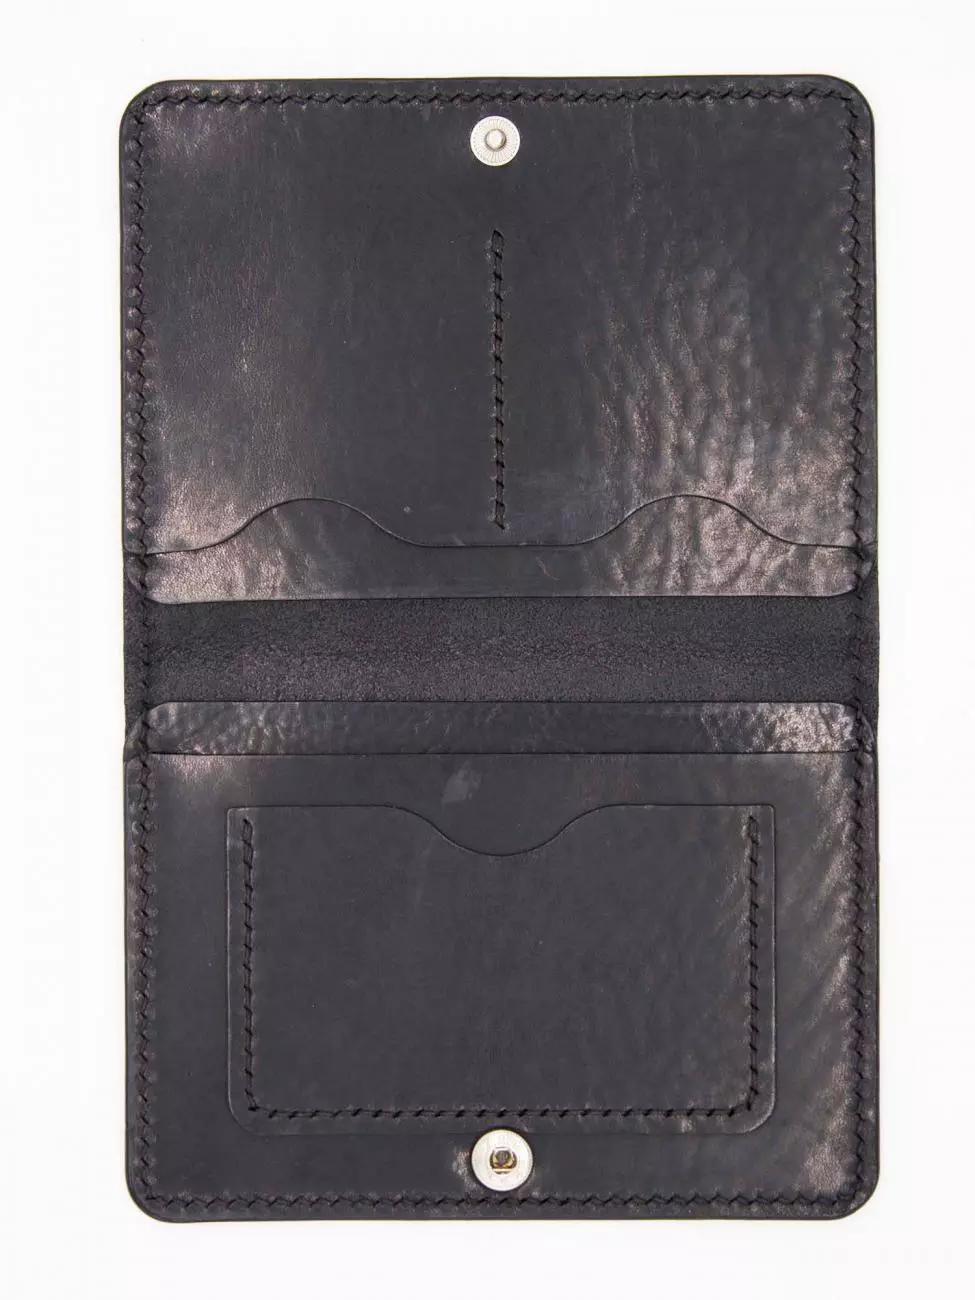 6 - Leather document holder